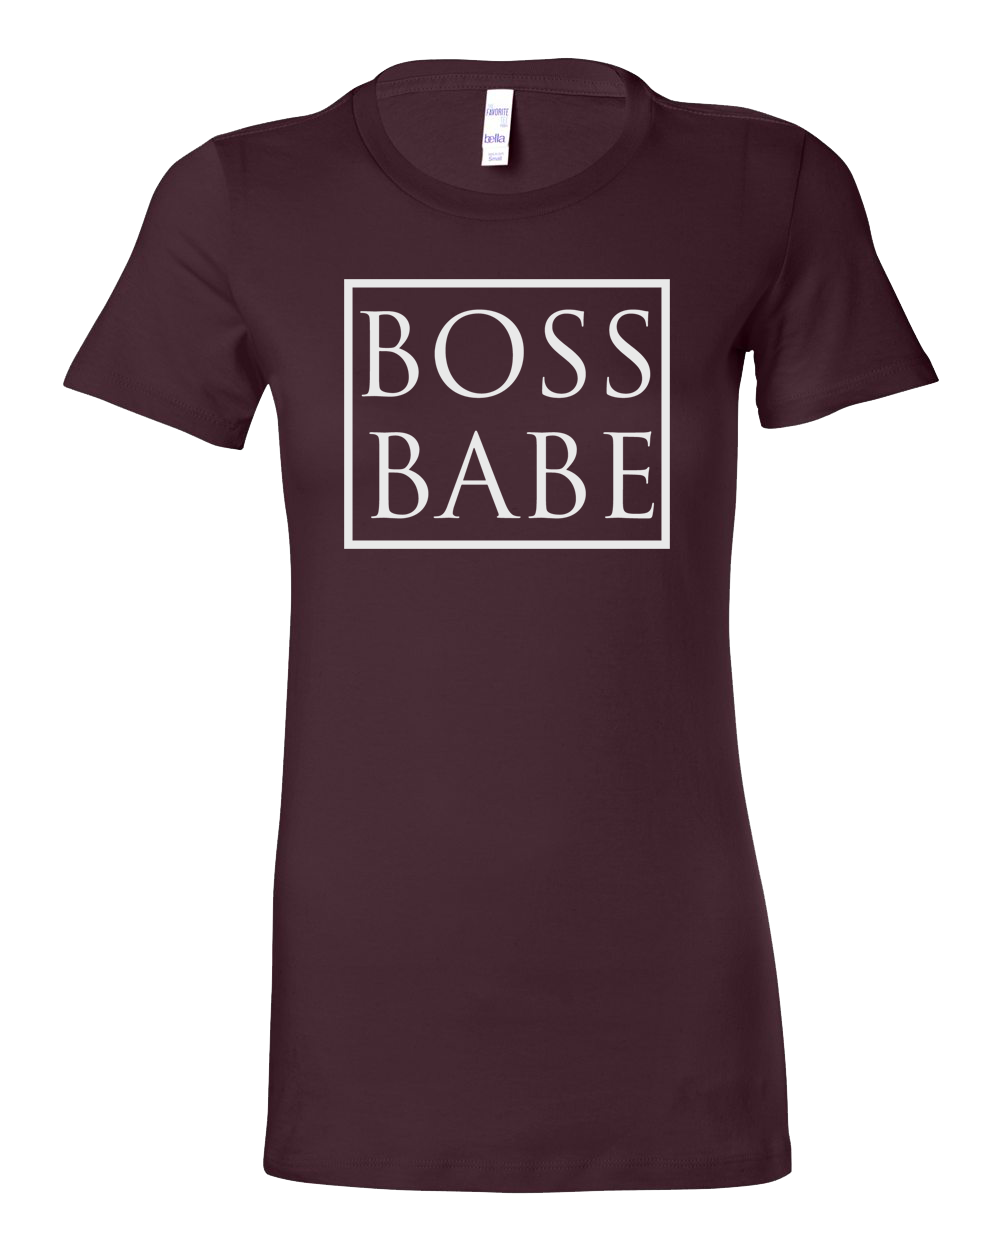 Boss Babe Women's Tee